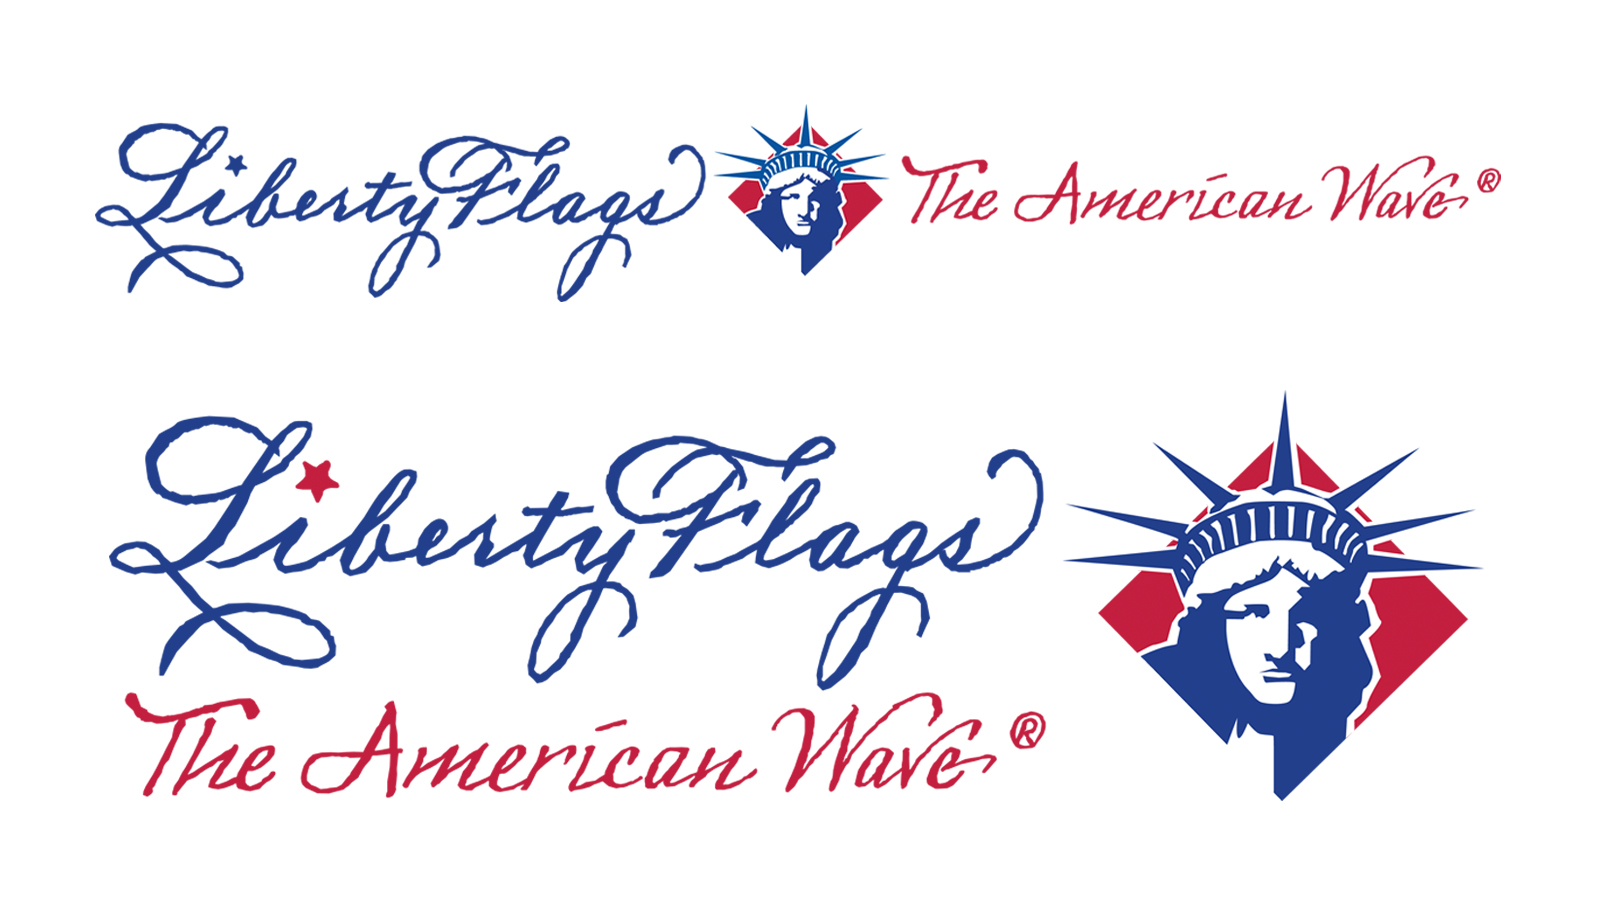 Liberty-logos-large-tmoss.jpg